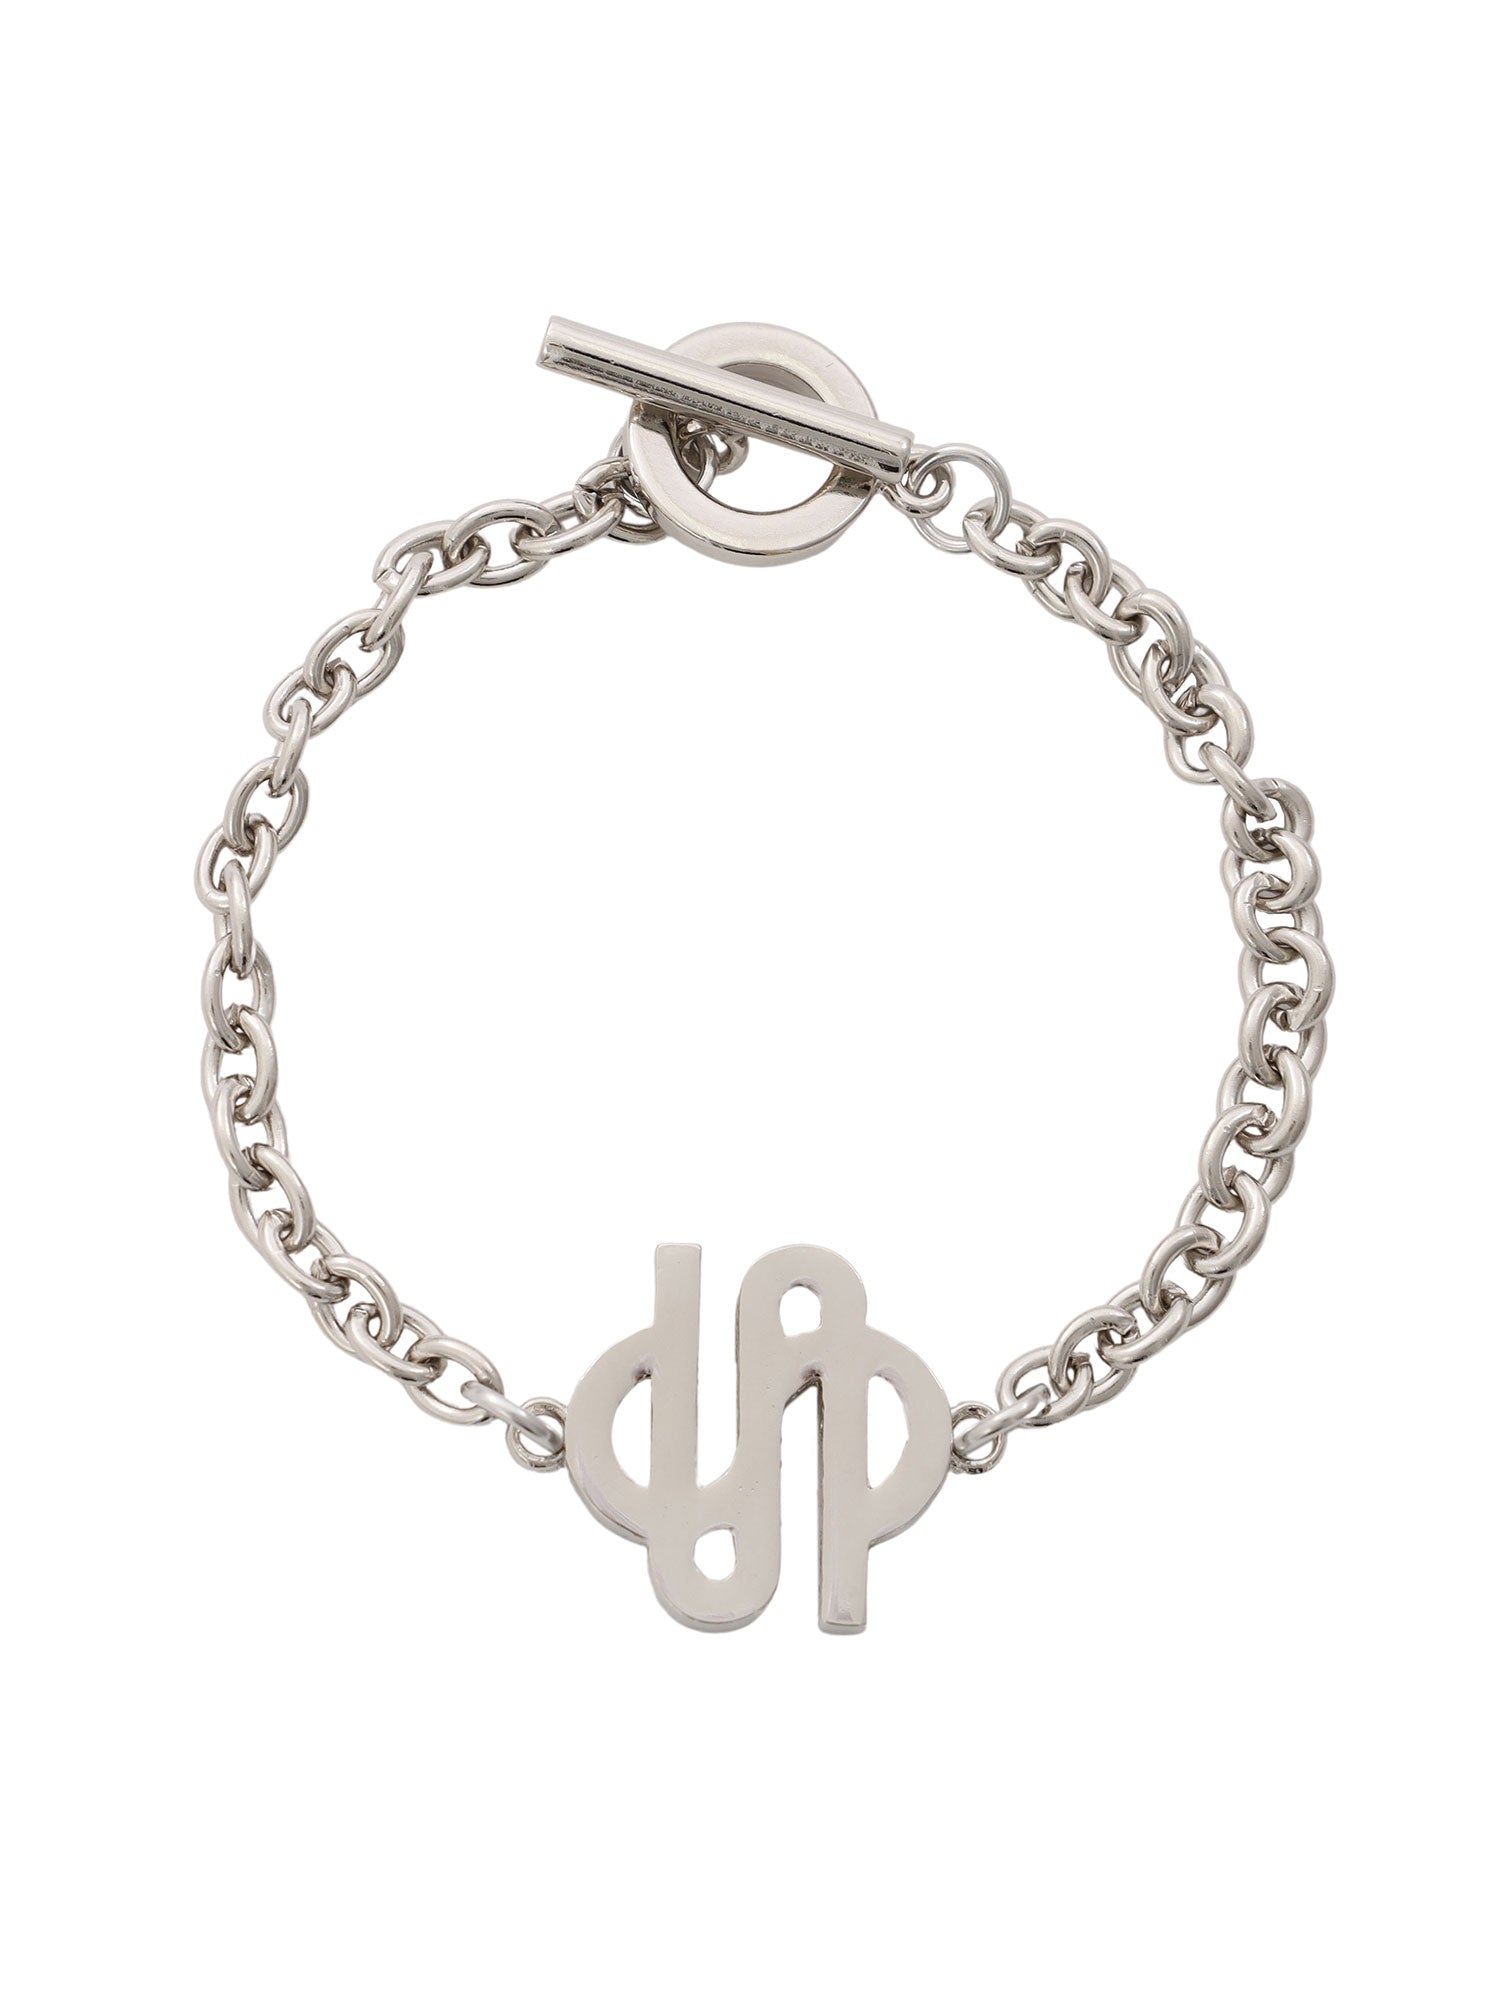 Chain Bracelet with Charm